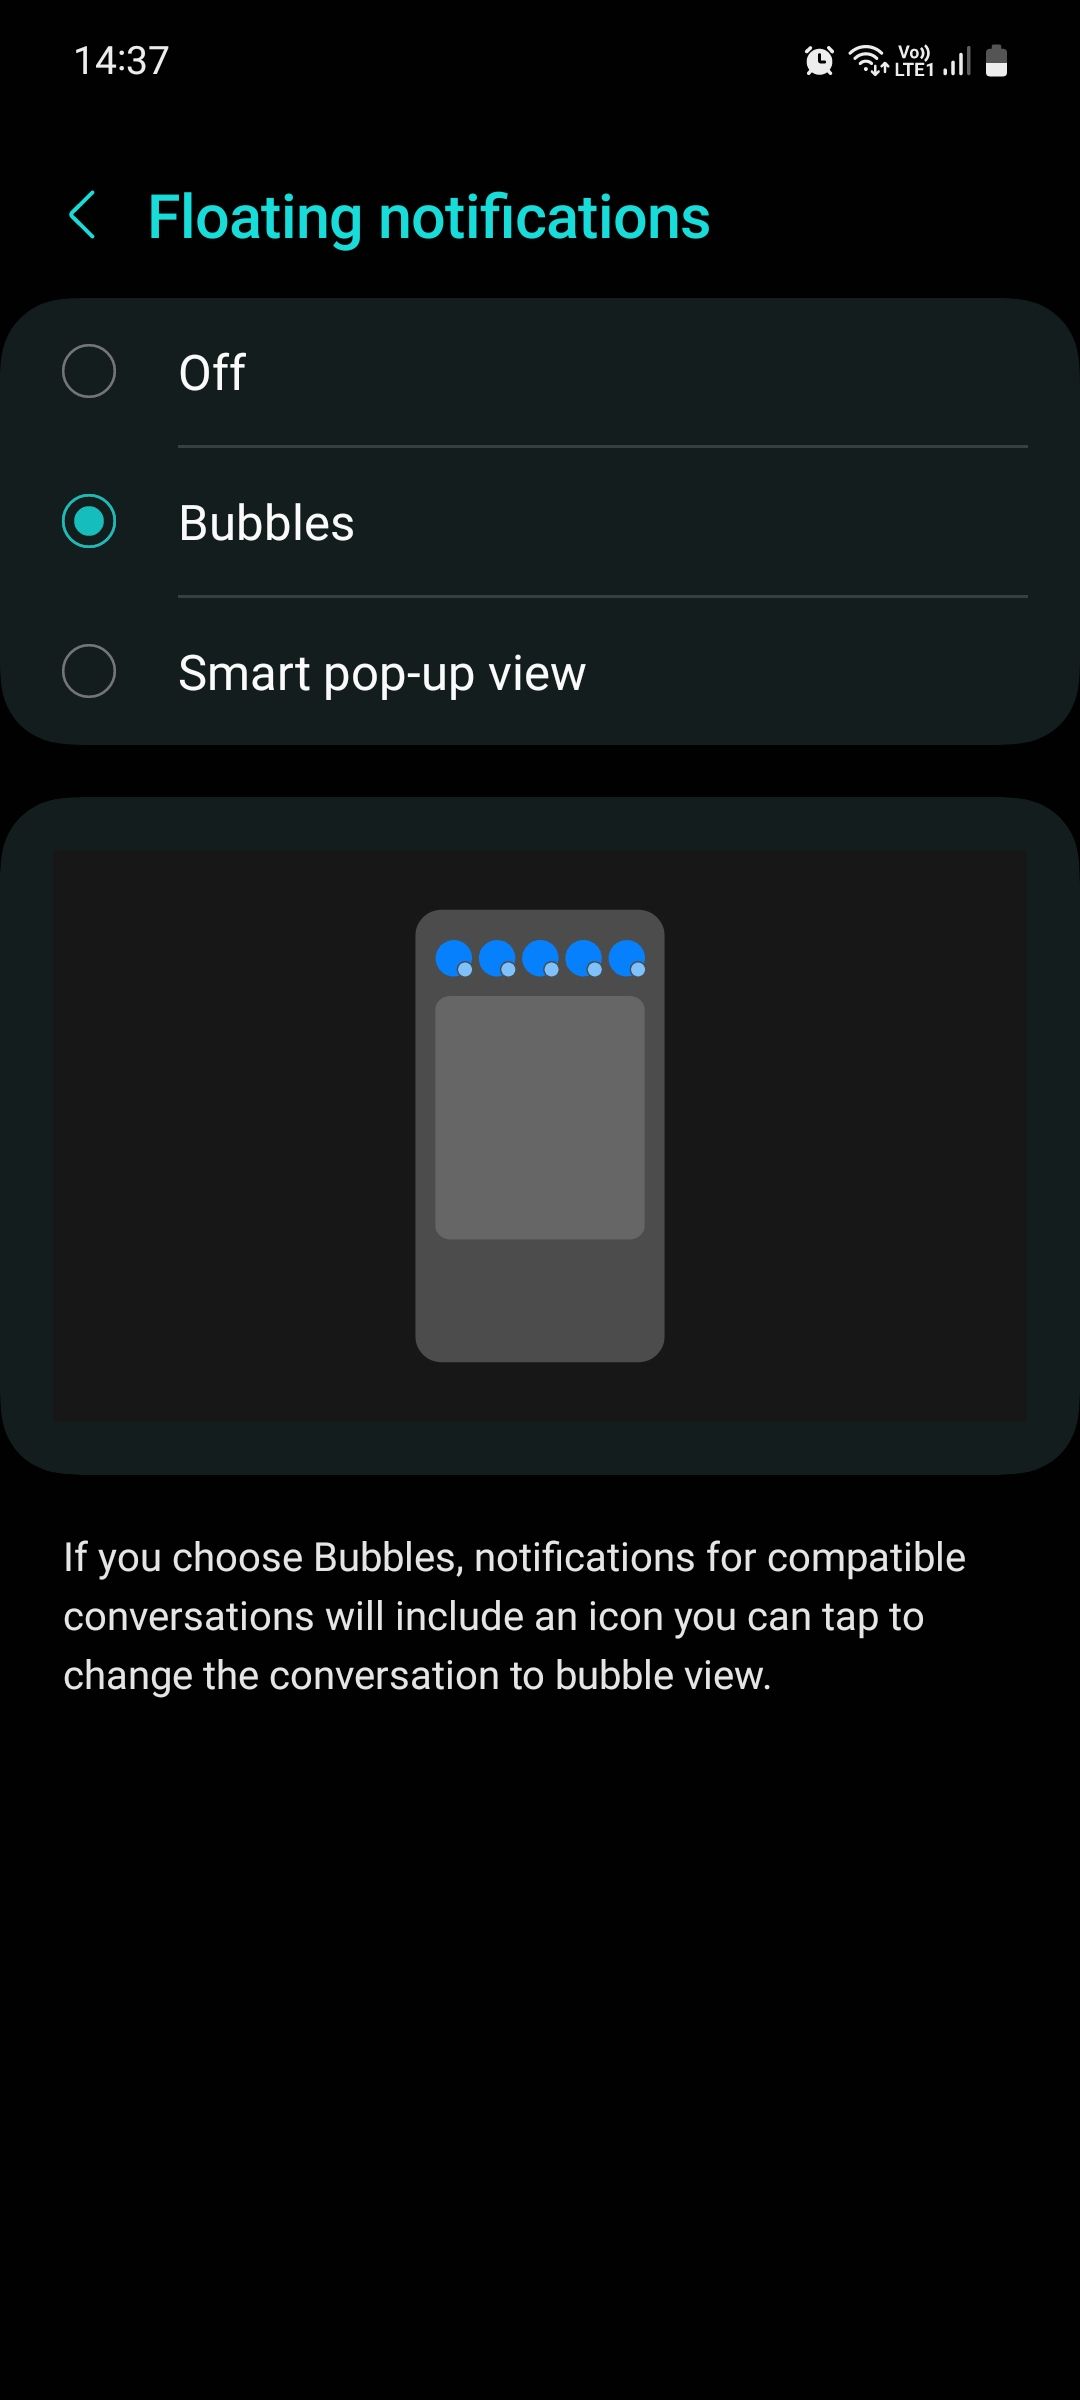 Samsung Floating notifications menu